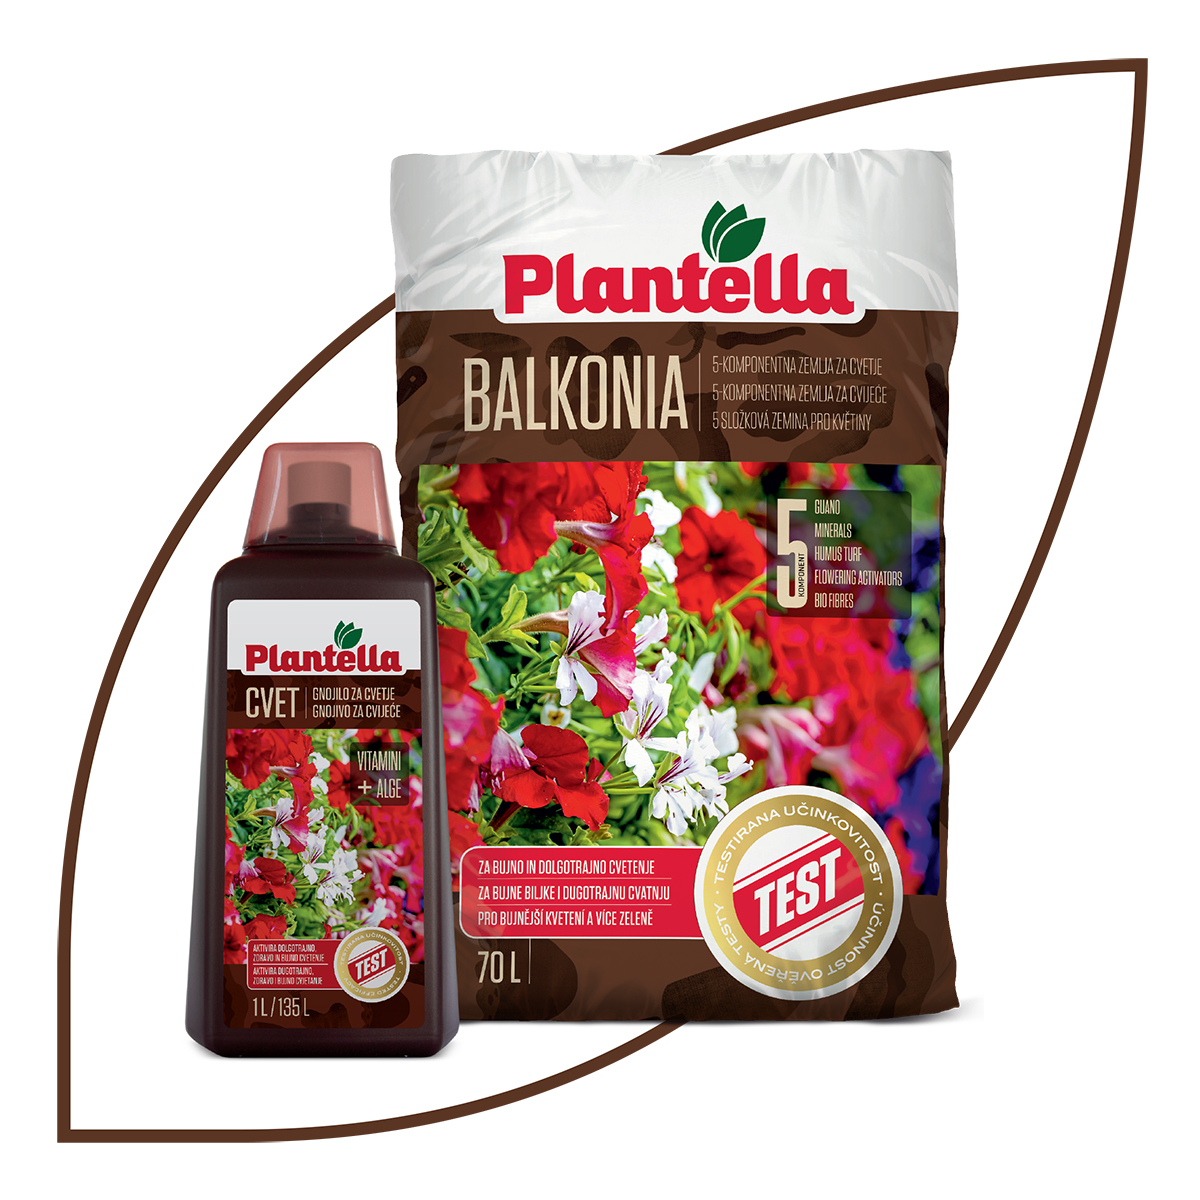 plantella-Balkonia-cvet-domnakvadrat